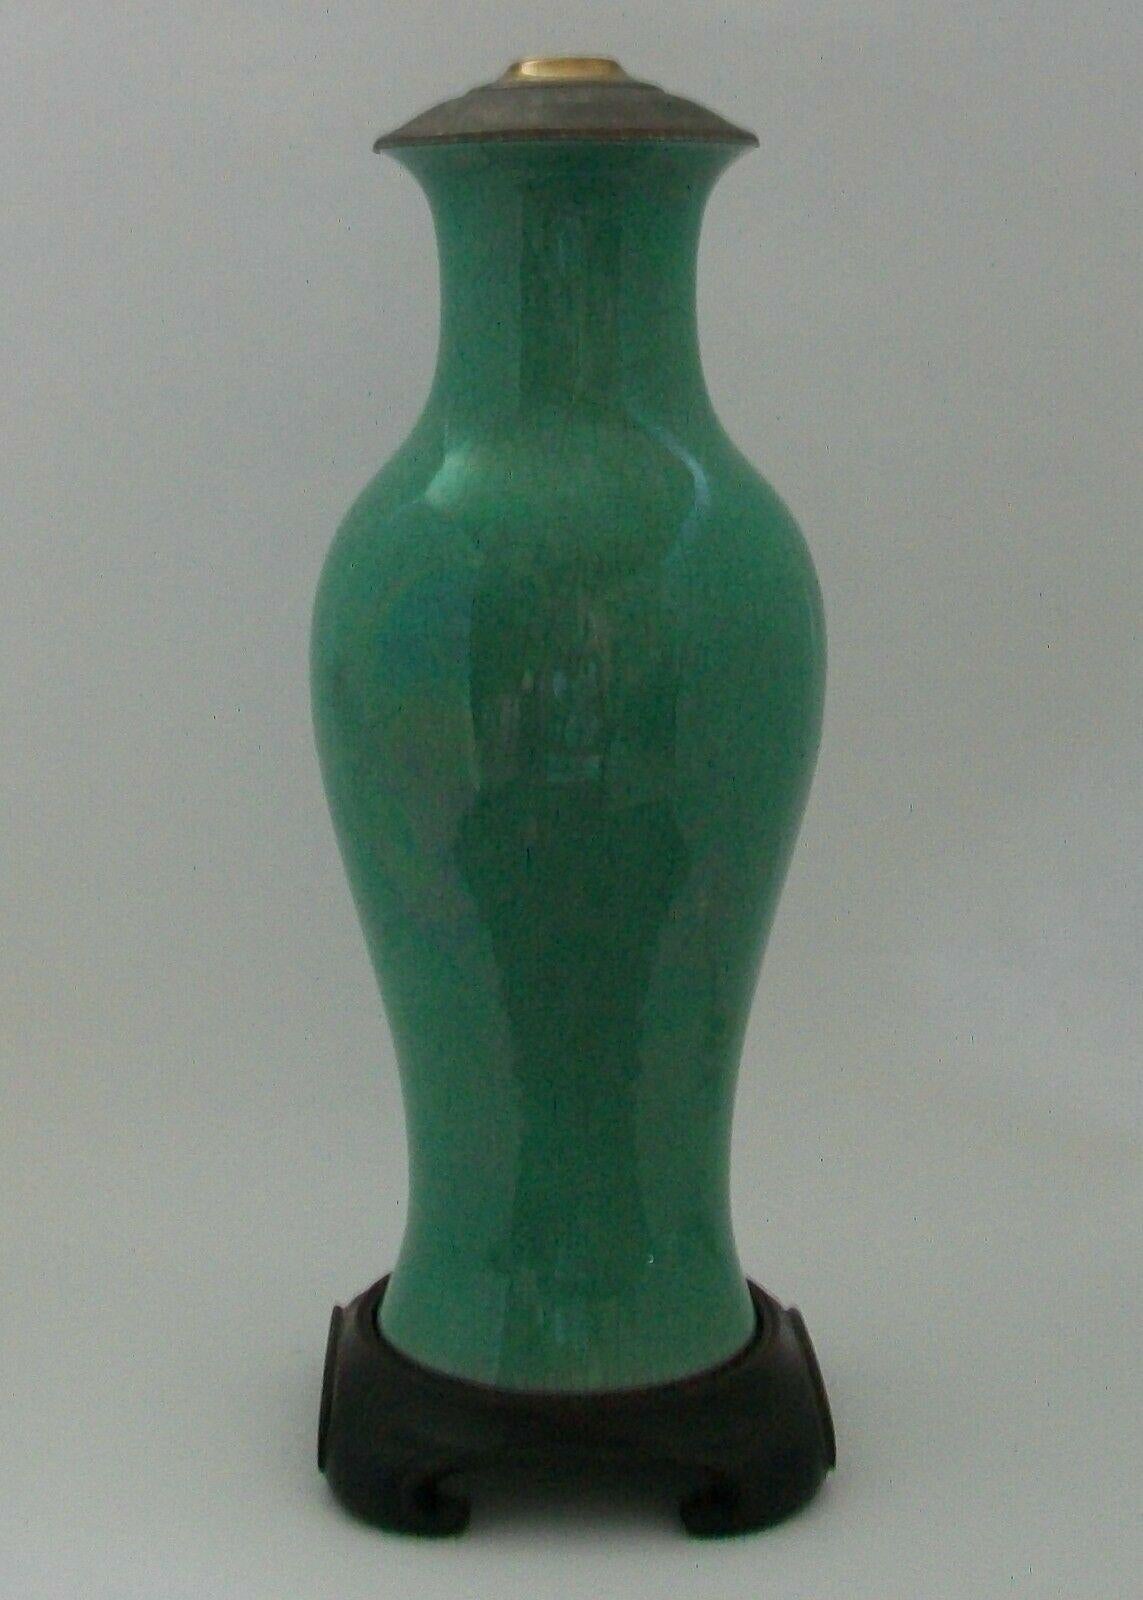 Rare Kangxi Dynasty (1654-1722) apple green over white crackle glazed baluster shaped ceramic vase/lamp - white crackle glazed interior and base - large size - electrified/drilled mid 20th century - vintage Chinese hardwood base - vintage brass cap